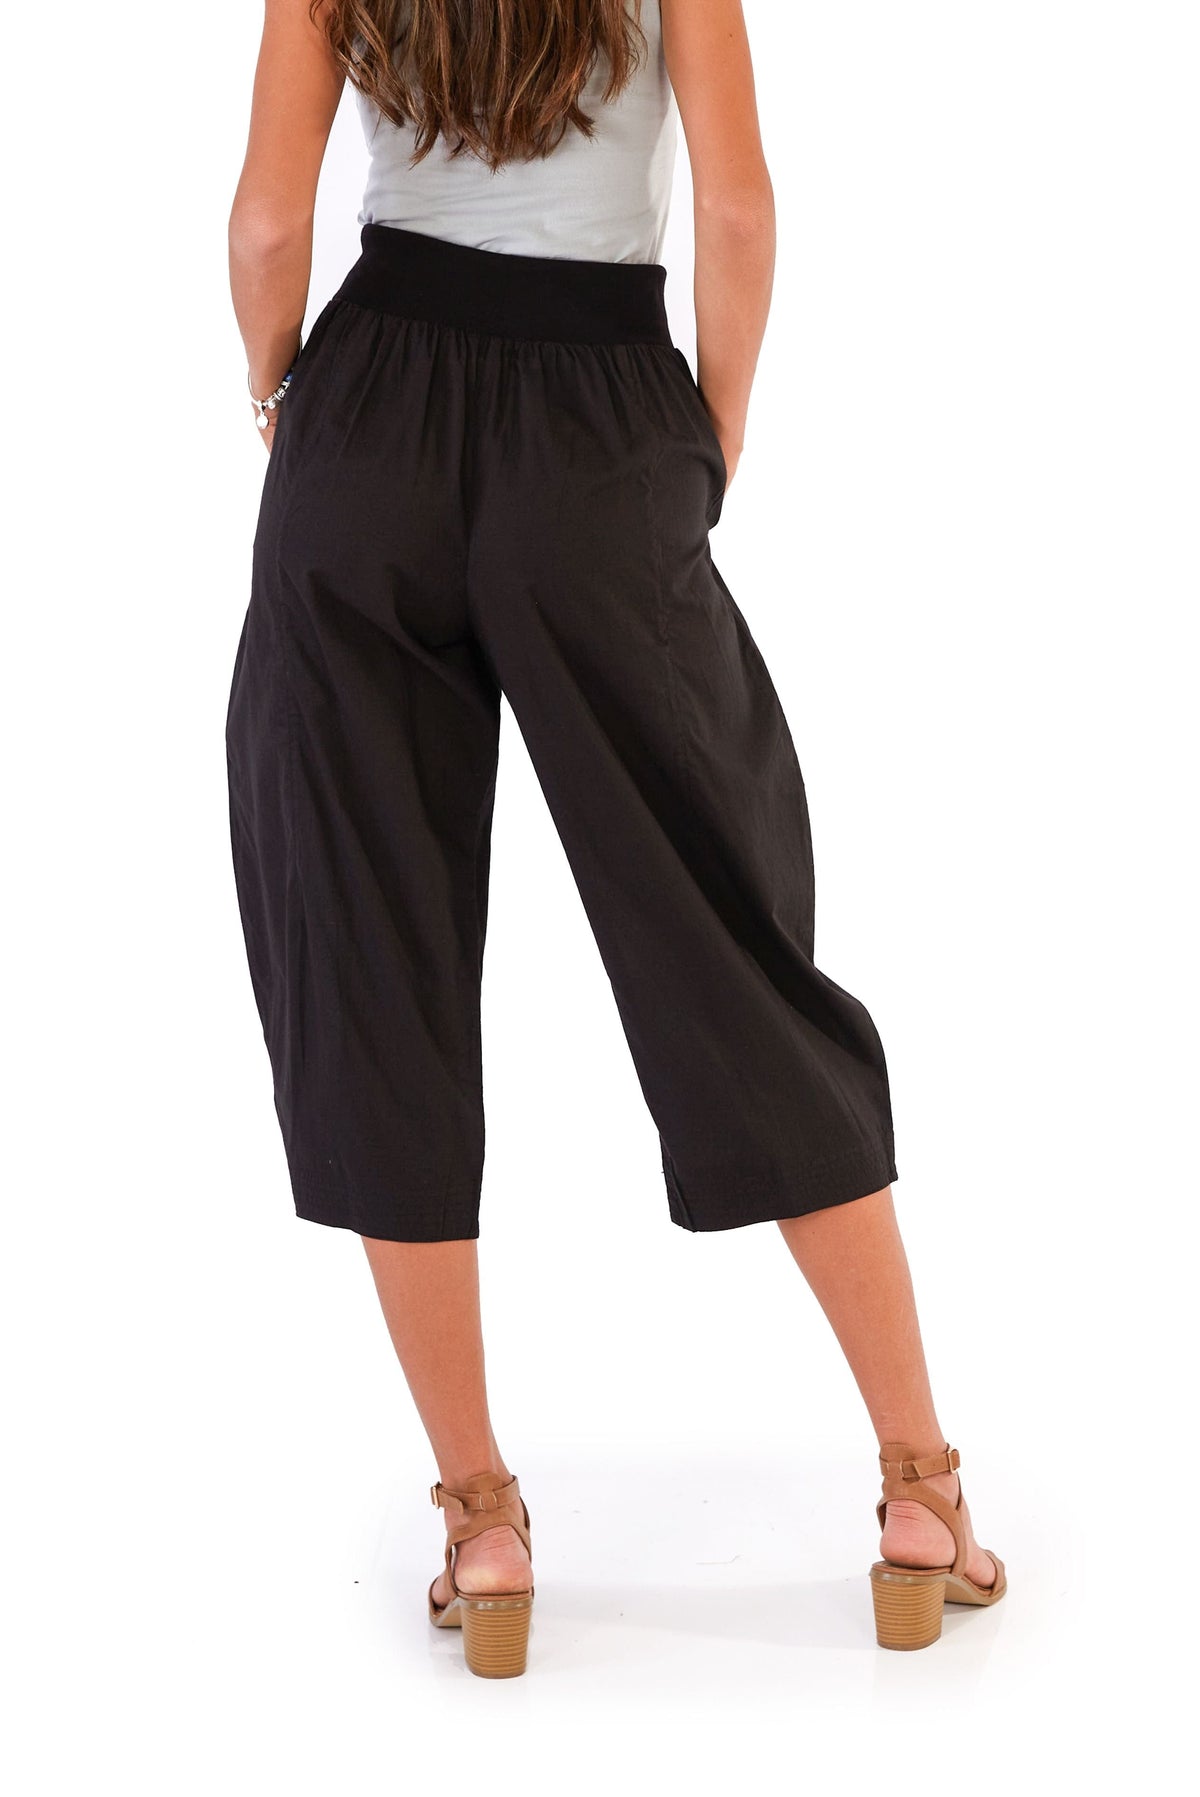 Yoga Pants - Black - OM Designs - Splash Swimwear  - OM Designs, pants - Splash Swimwear 